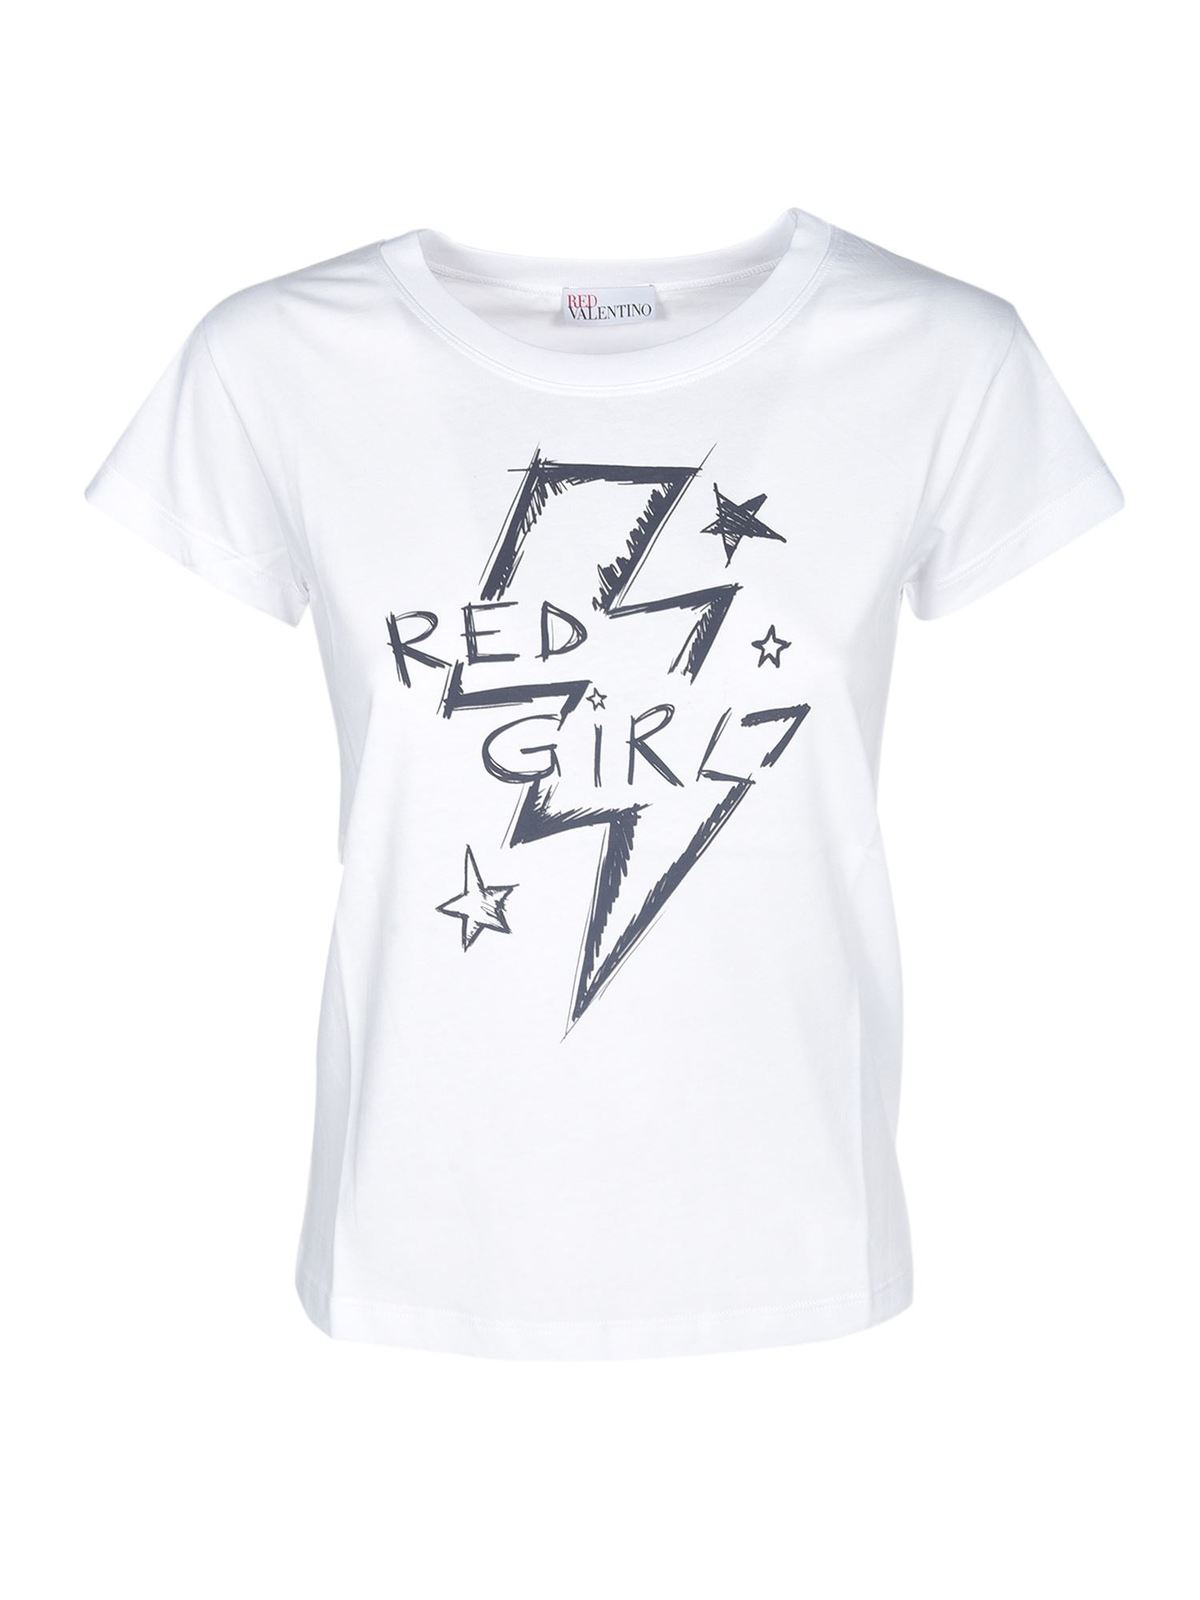 red girl clothing website